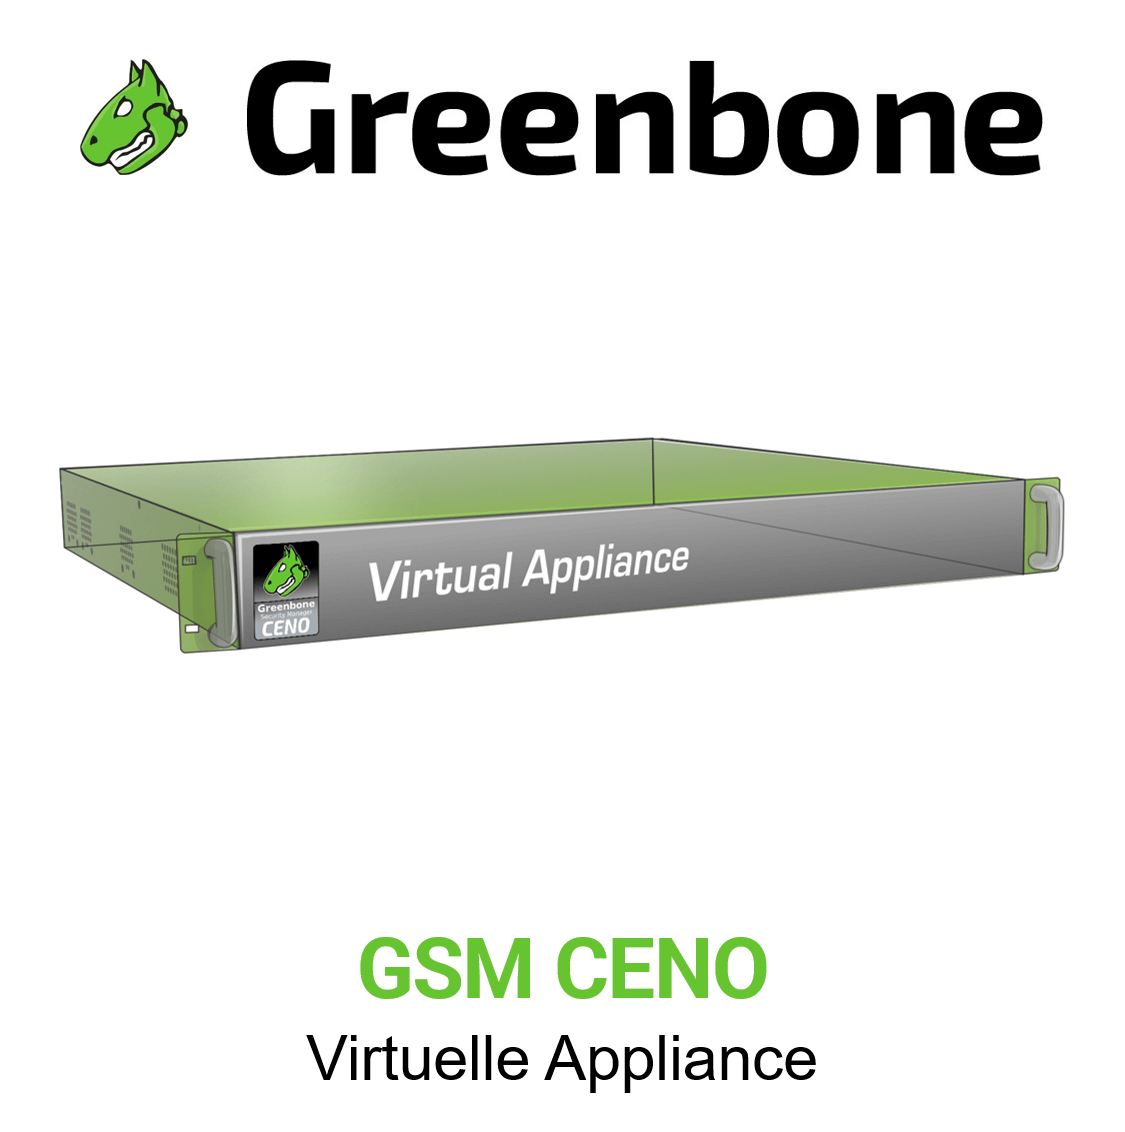 Greenbone Enterprise GSM CENO Virtuelle Appliance